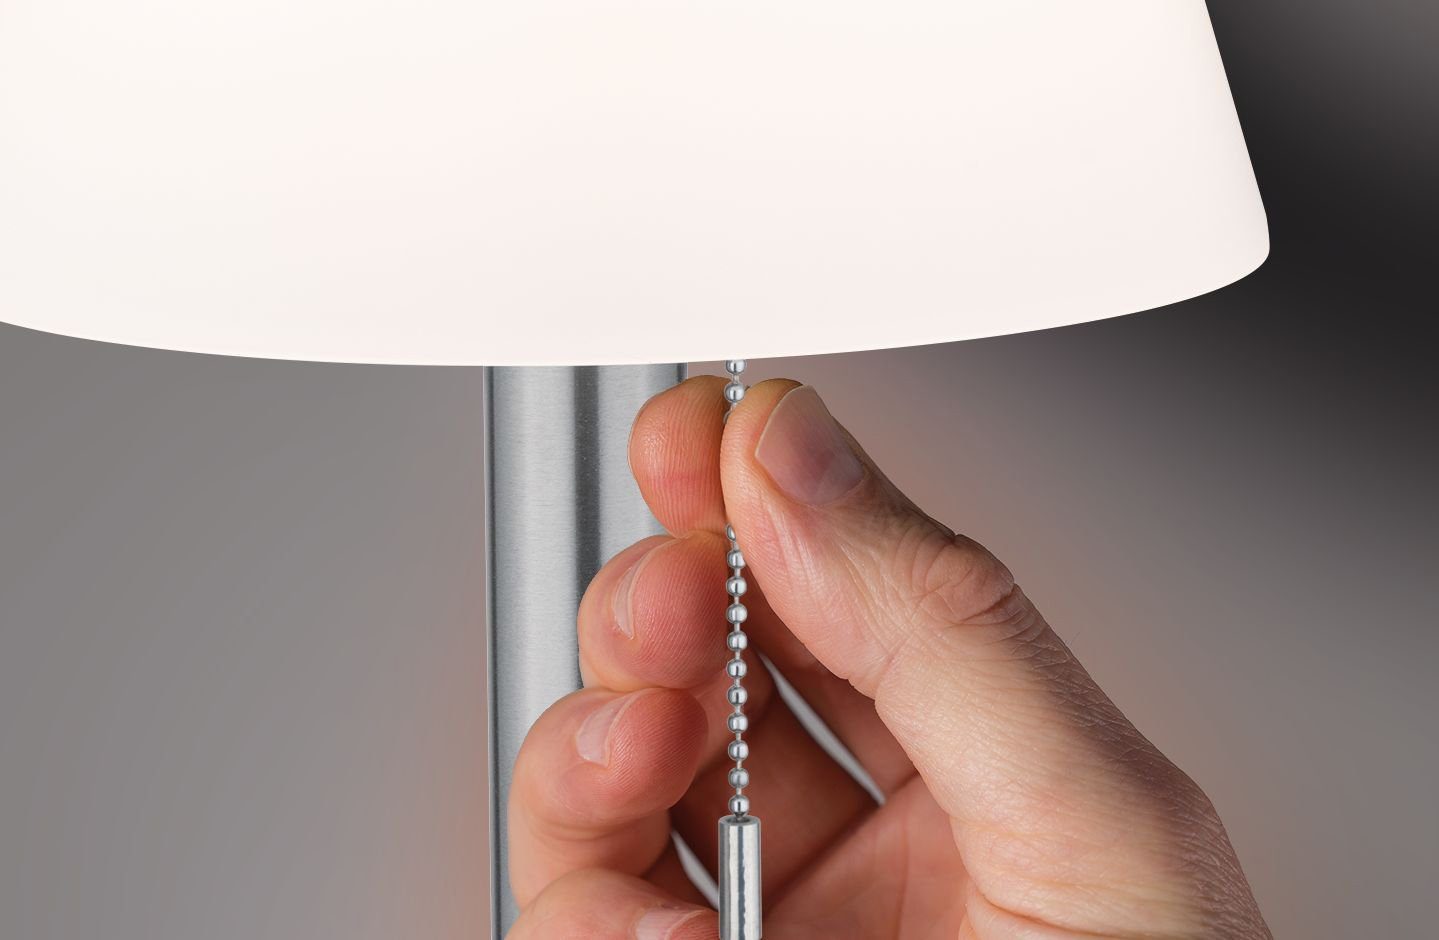 Paulmann LED Außen-Tischleuchte Lillesol, LED integriert, dimmbar Warmweiß, LED-Board, Solar, fest